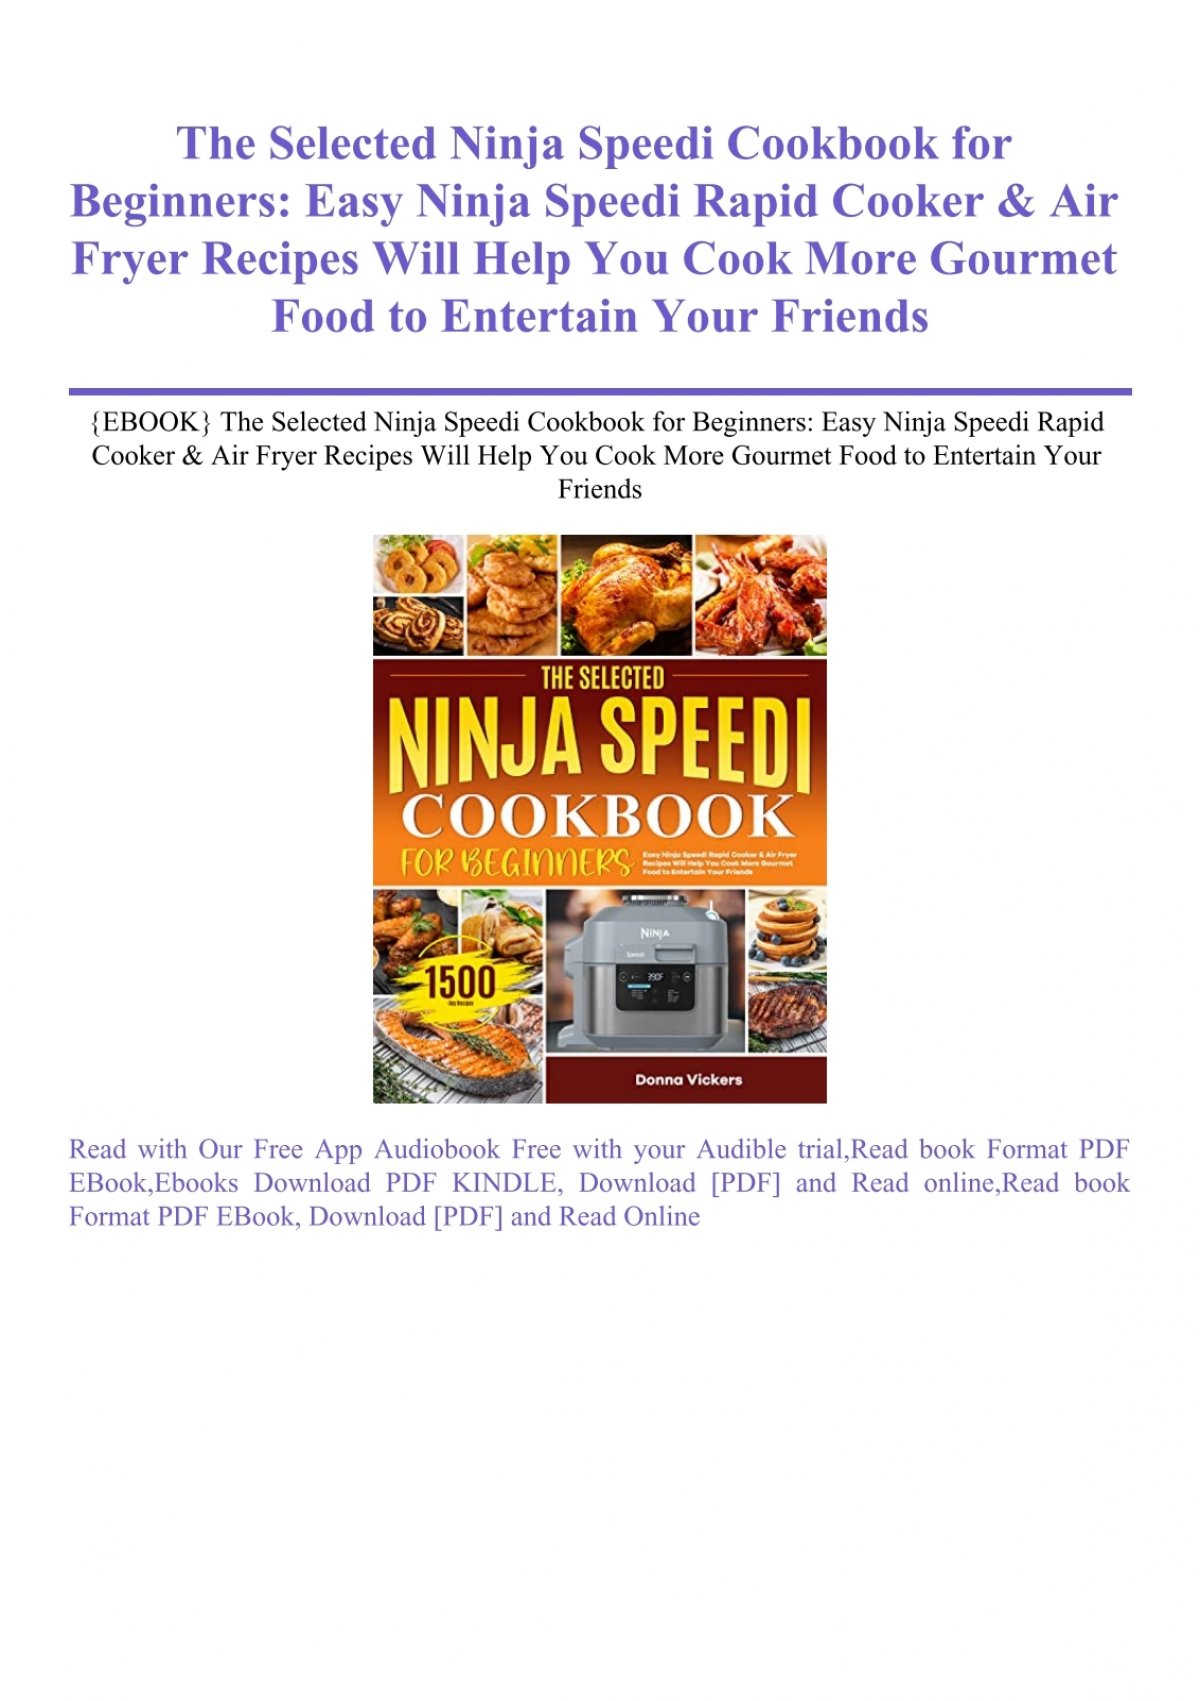  The Selected Ninja Speedi Cookbook for Beginners: Easy